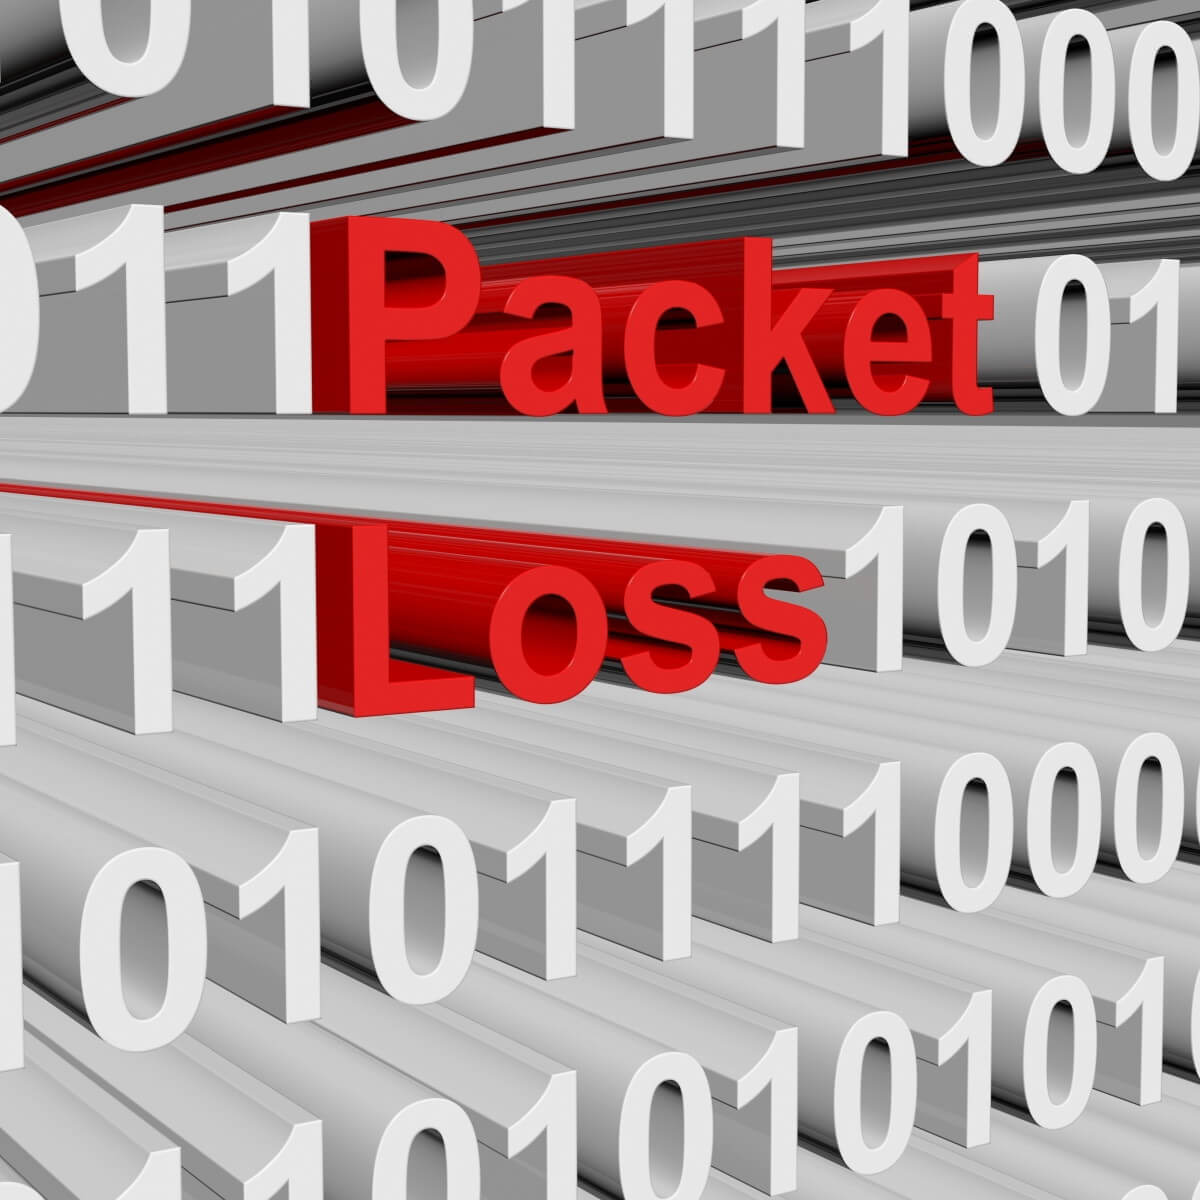 Can VPN improve packet loss